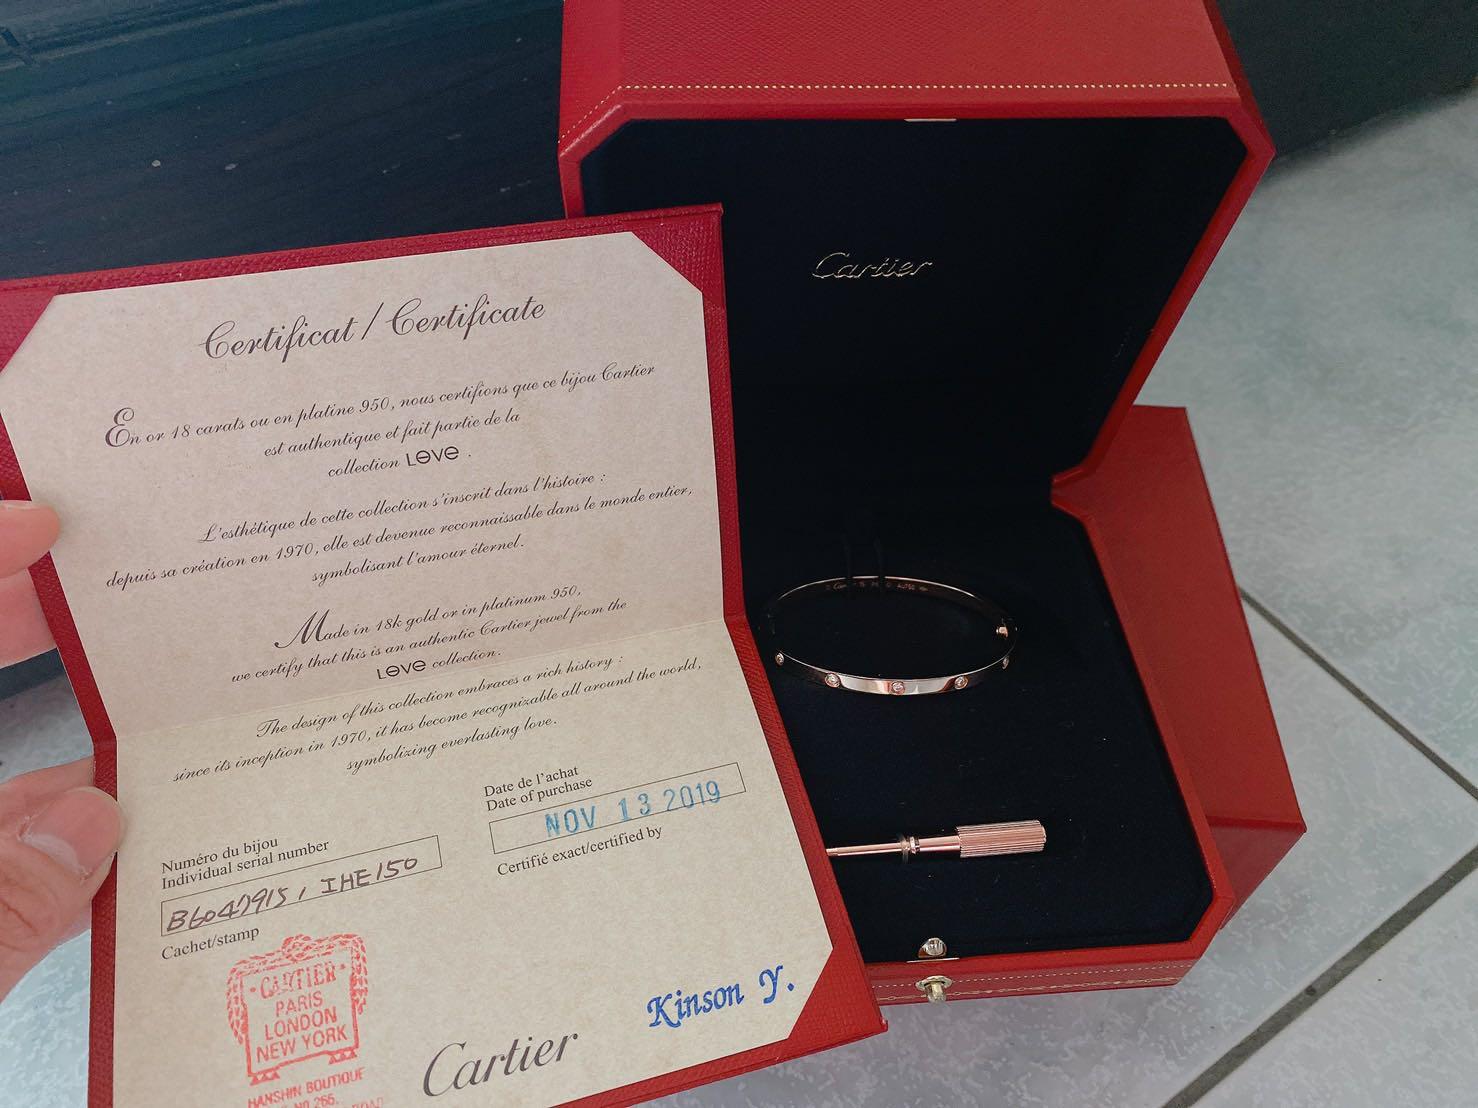 authentic cartier love bracelet certificate